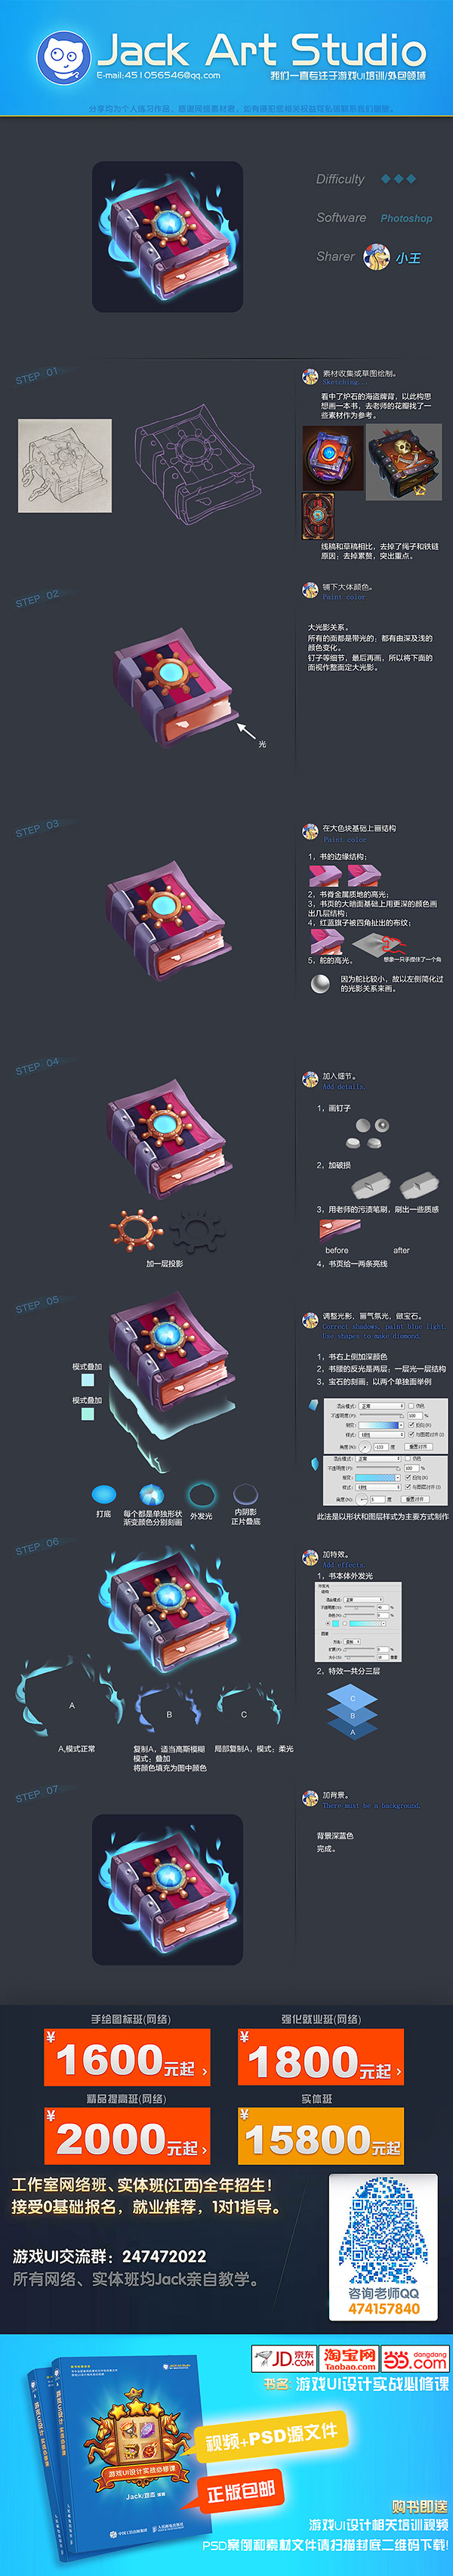 【JACK游戏UI】GAME UI二次元欧美风中国风界面美术设计原画手绘图标平面素材GUI/ICON/UIUX